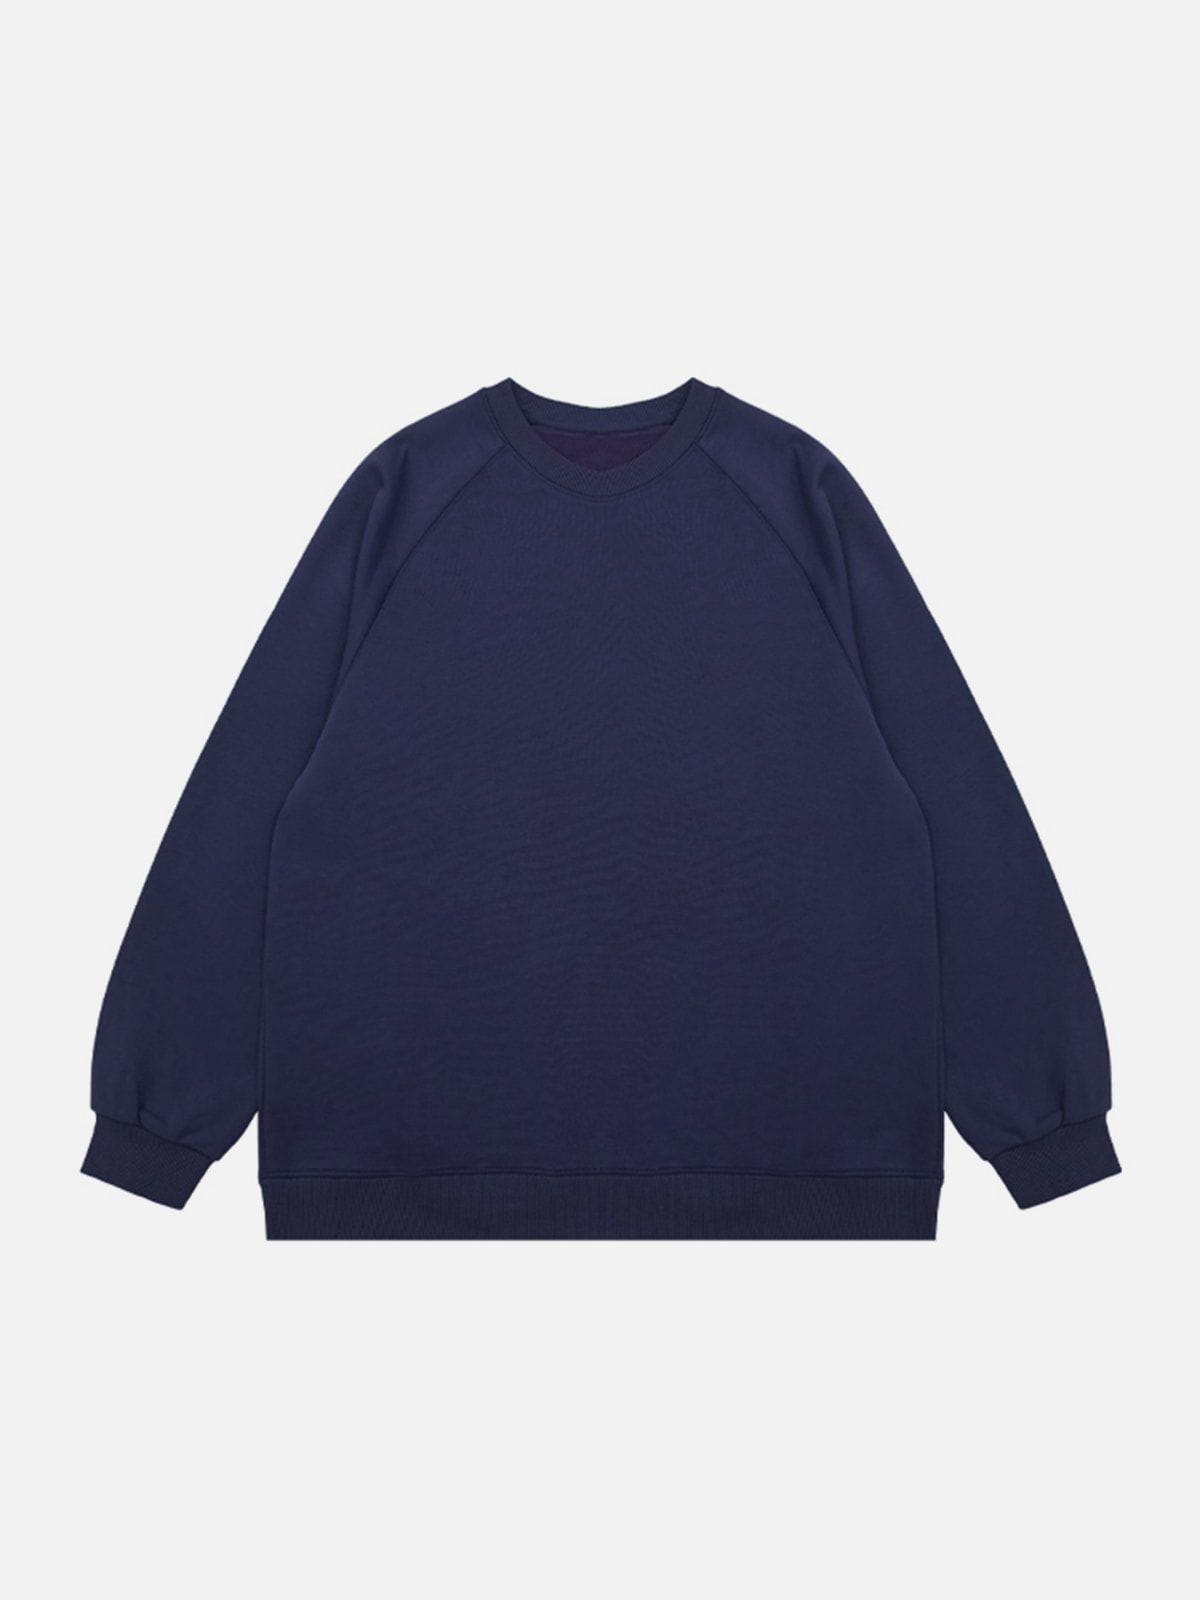 Eprezzy® - Solid Color Sweatshirt Streetwear Fashion - eprezzy.com